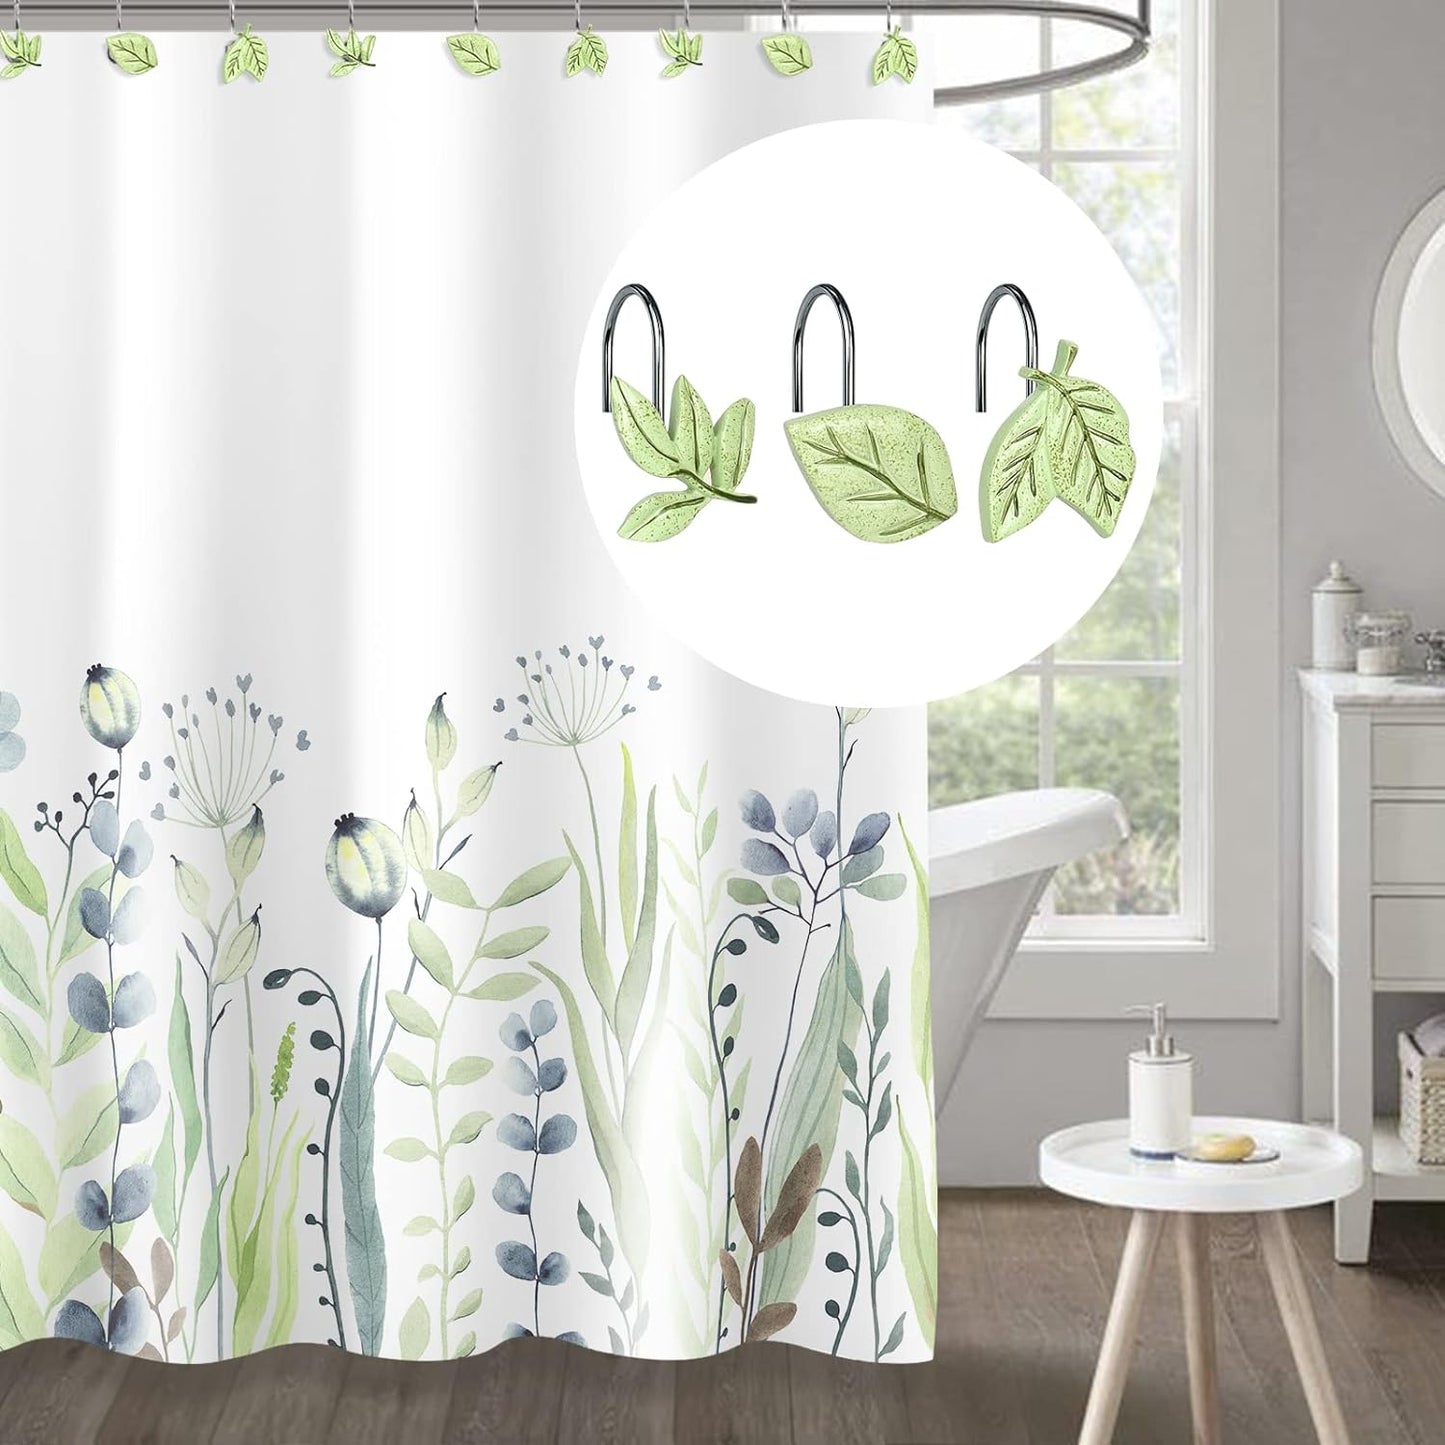 Light Green Plant Leaves Decorative Shower Curtain Hooks, Tropical Botanical Plam Tree Leaf Shower Curtain Rings for Bathroom, Resin, Cute Shower Curtain Hanger Hooks Bathroom Decor, Set of 12